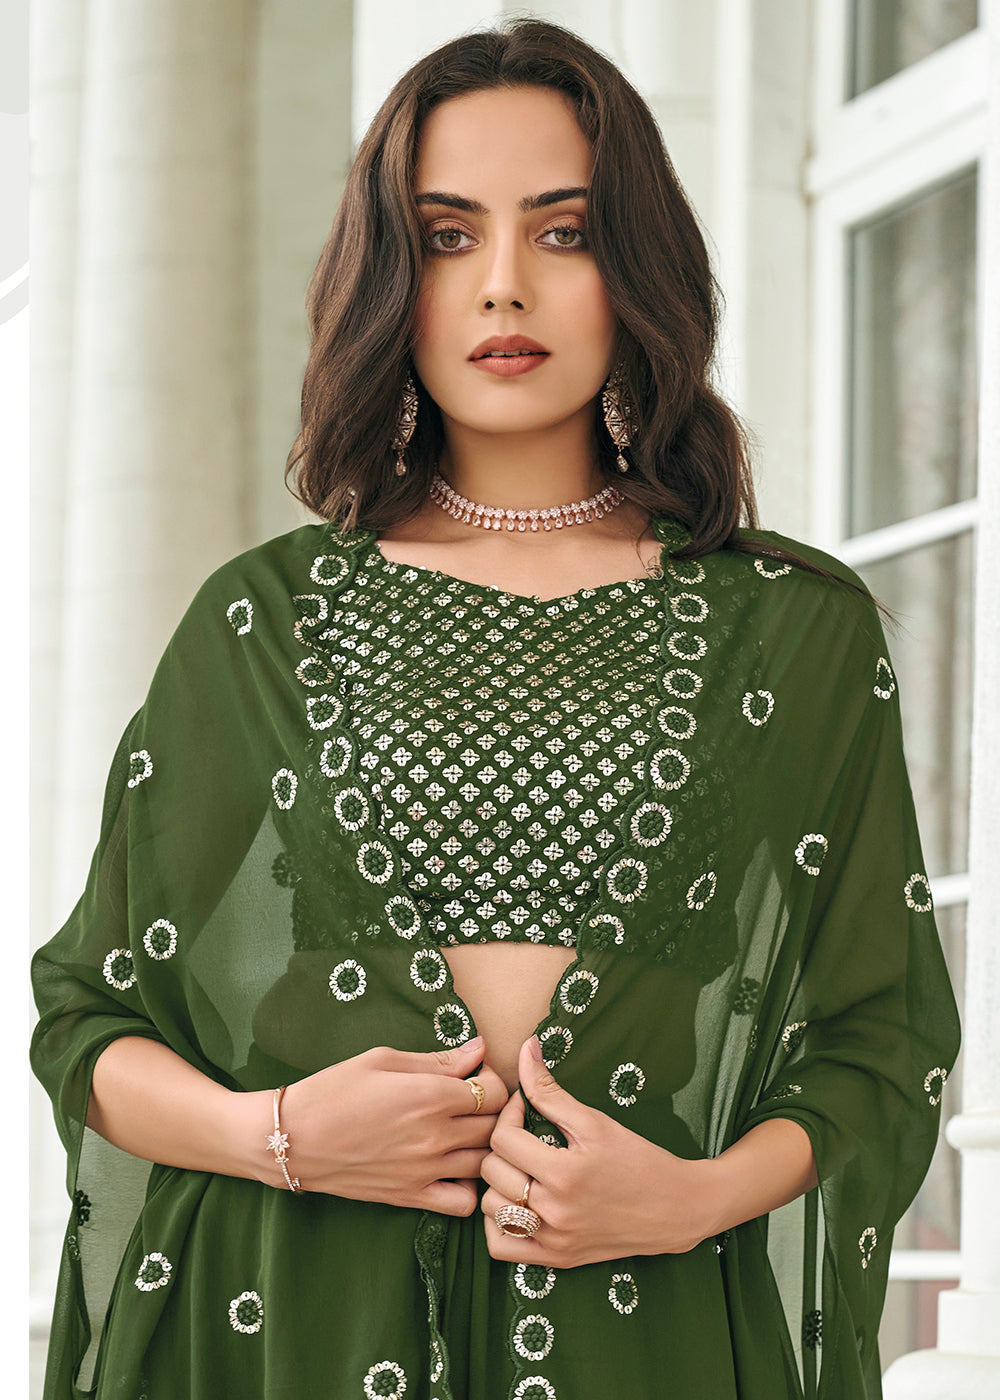 Buy Now Olive Green Sequined Embroidered Shrug Style Lehenga Choli Online in USA, UK, Canada & Worldwide at Empress Clothing. 